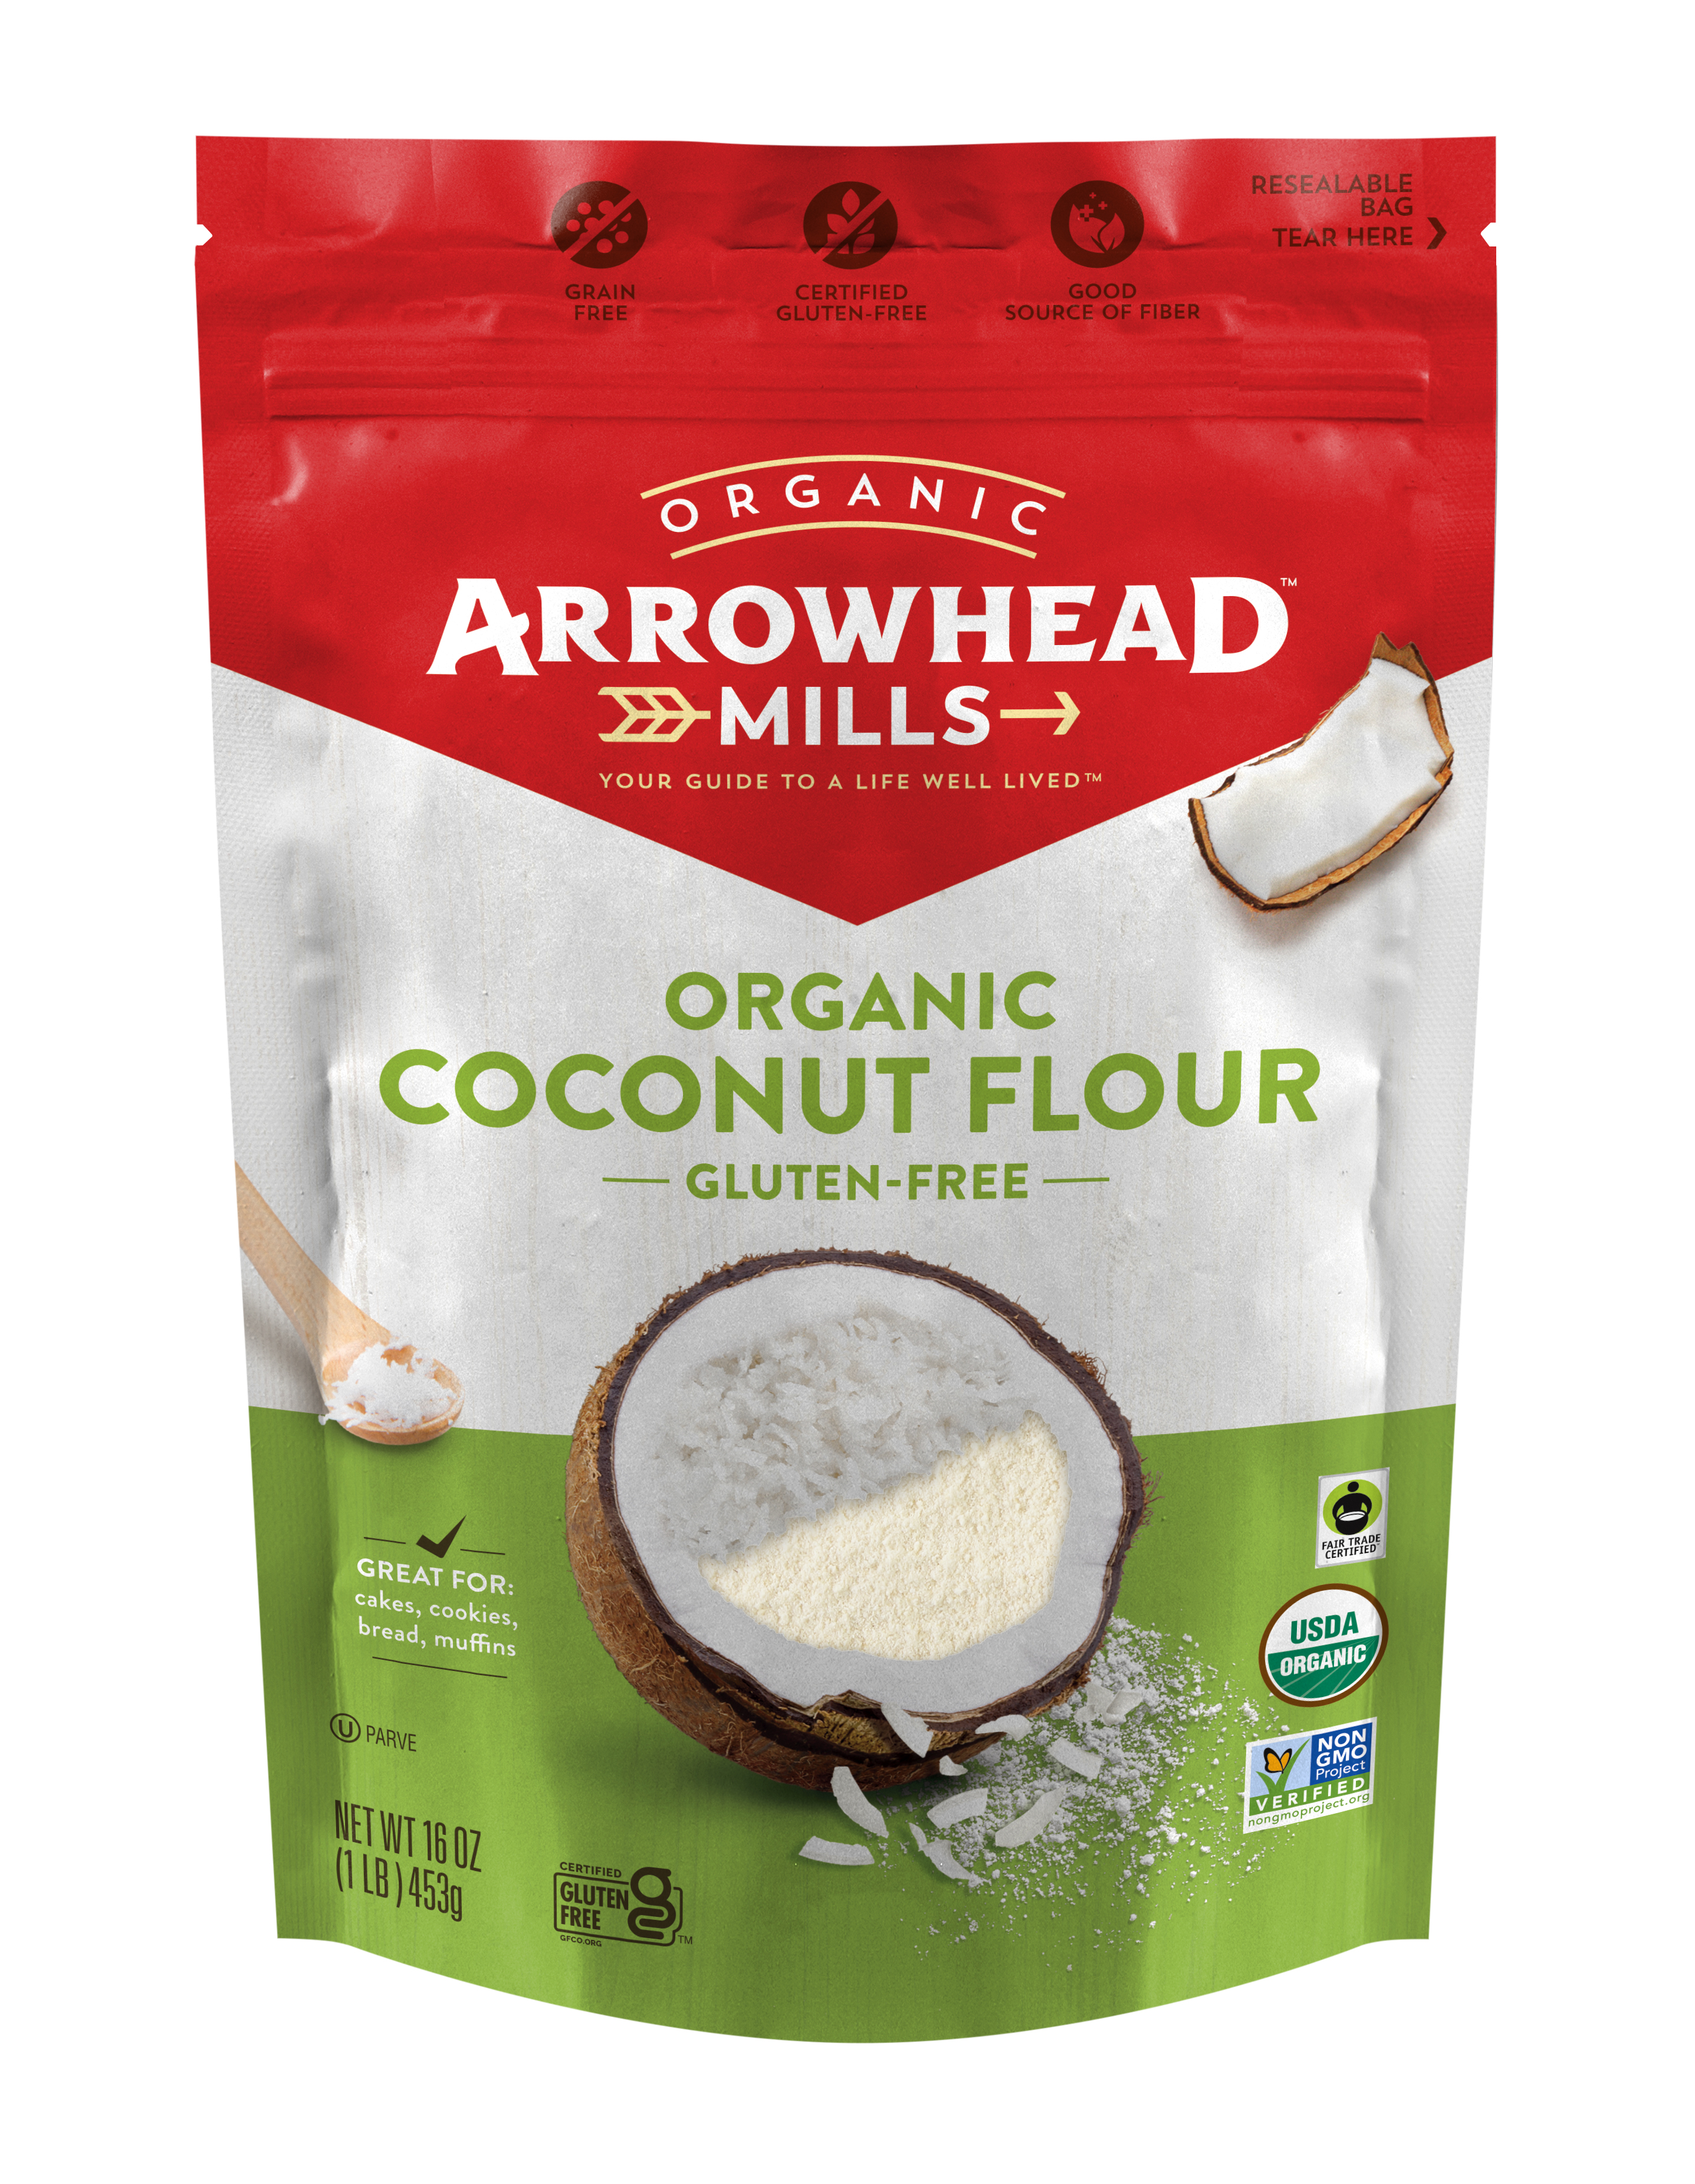 Arrowhead Mills Coconut Flour 6 units per case 16.0 oz